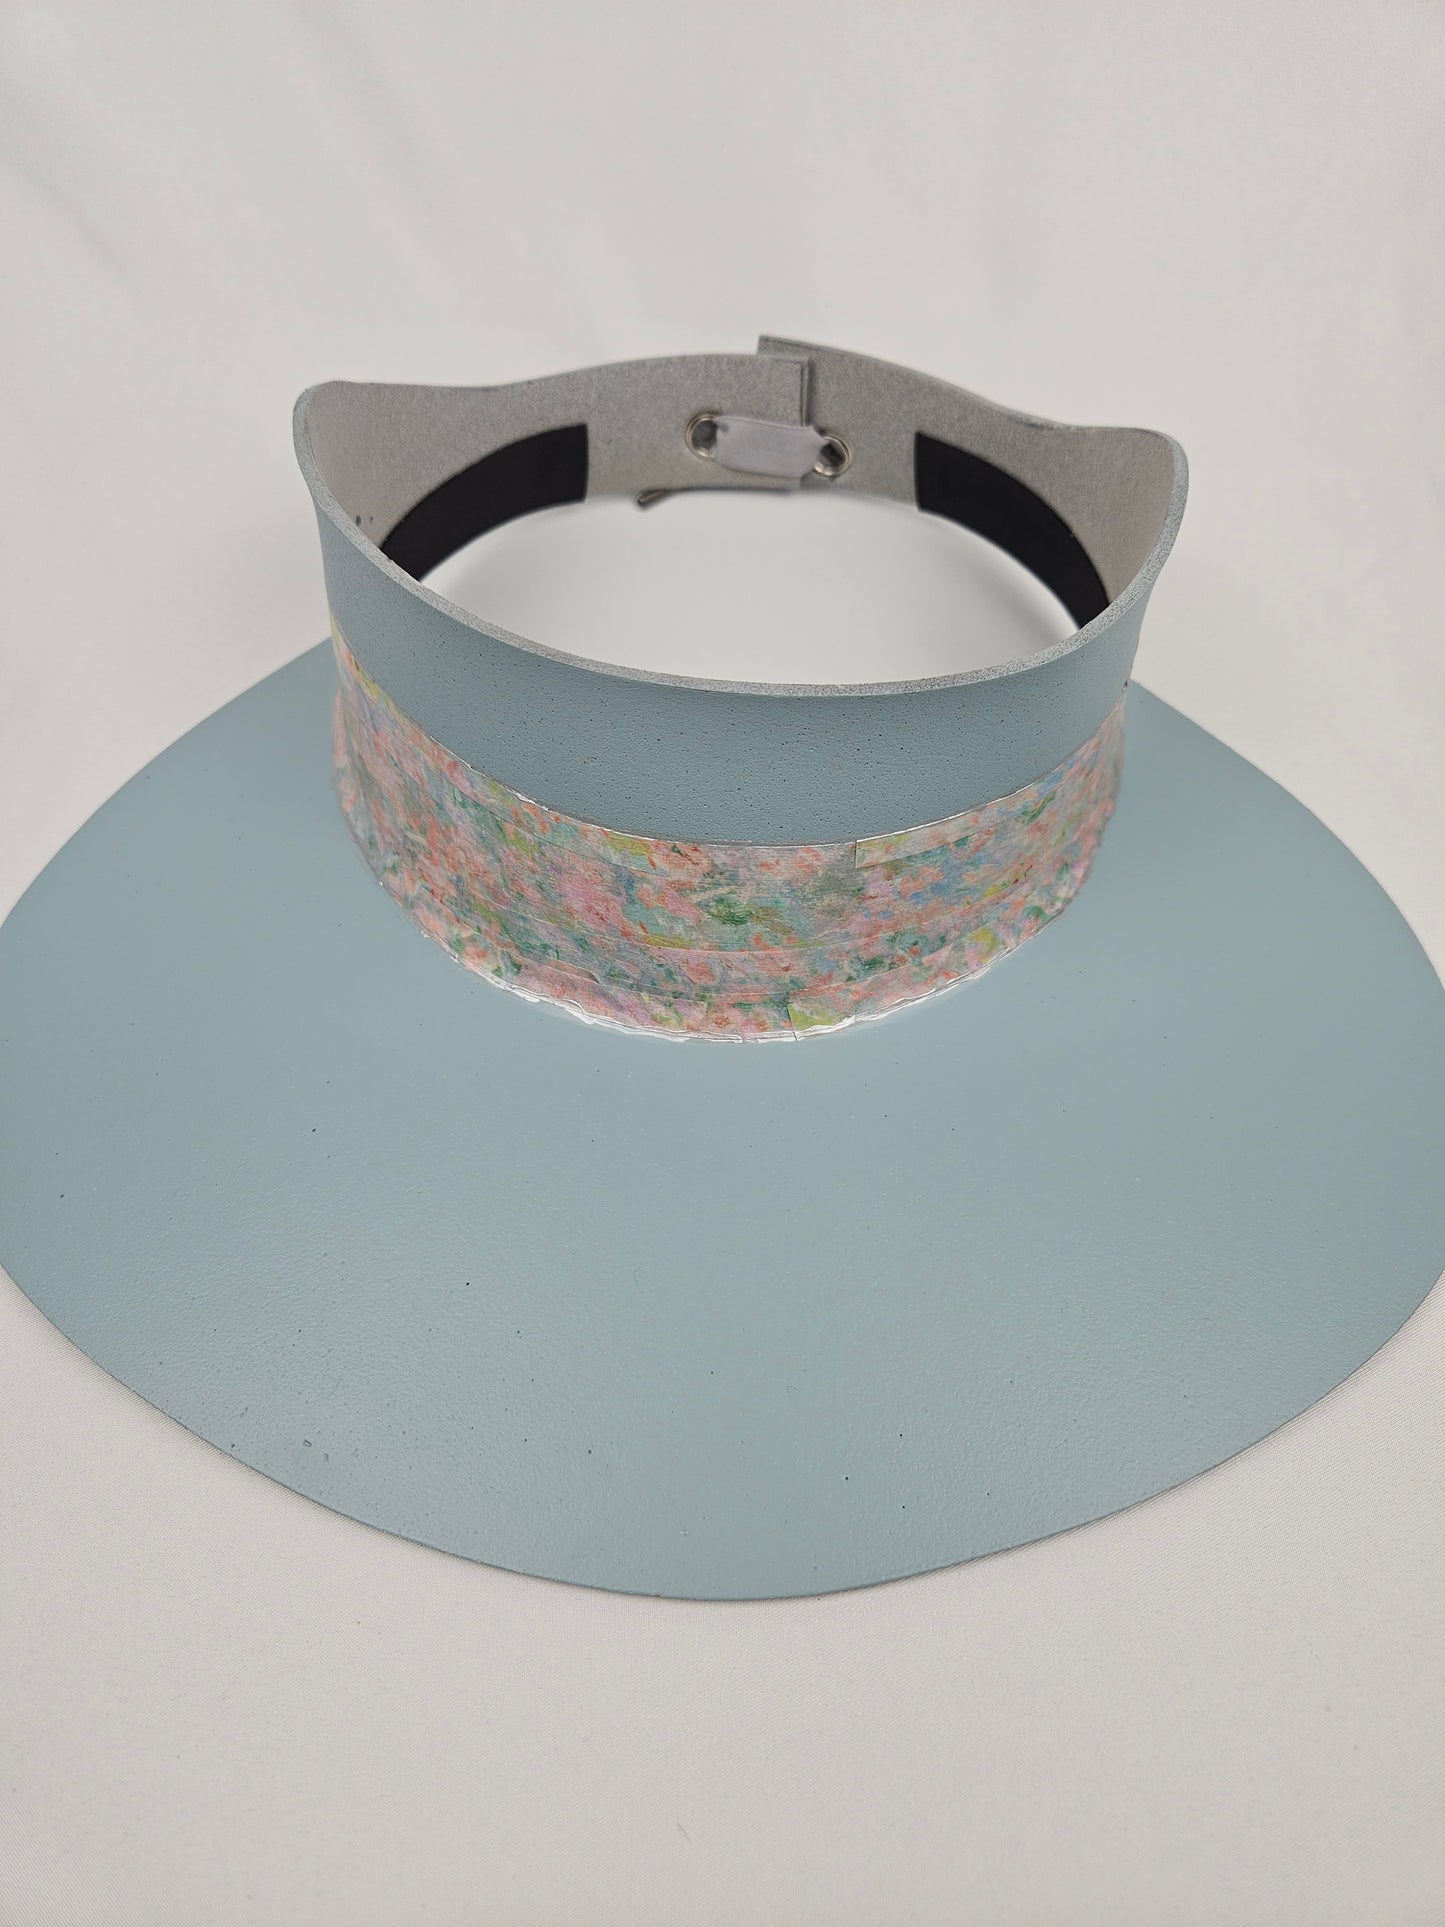 Tall Soft Blue Audrey Foam Sun Visor Hat with Pastel Floral Band: 1950s, Walks, Brunch, Asian, Golf, Easter, Church, No Headache, Derby